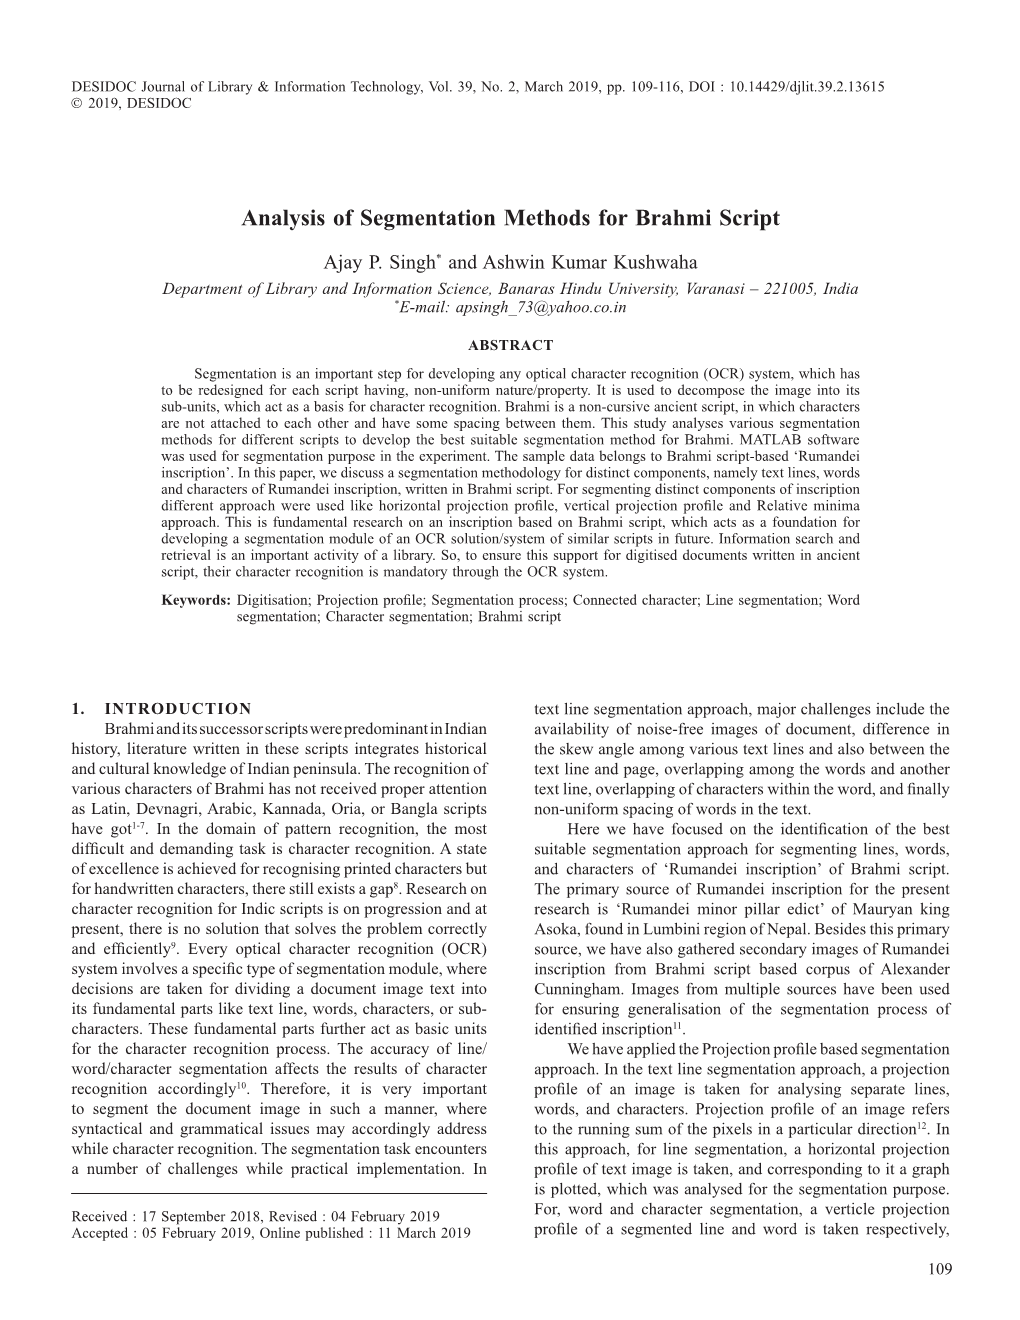 Analysis of Segmentation Methods for Brahmi Script